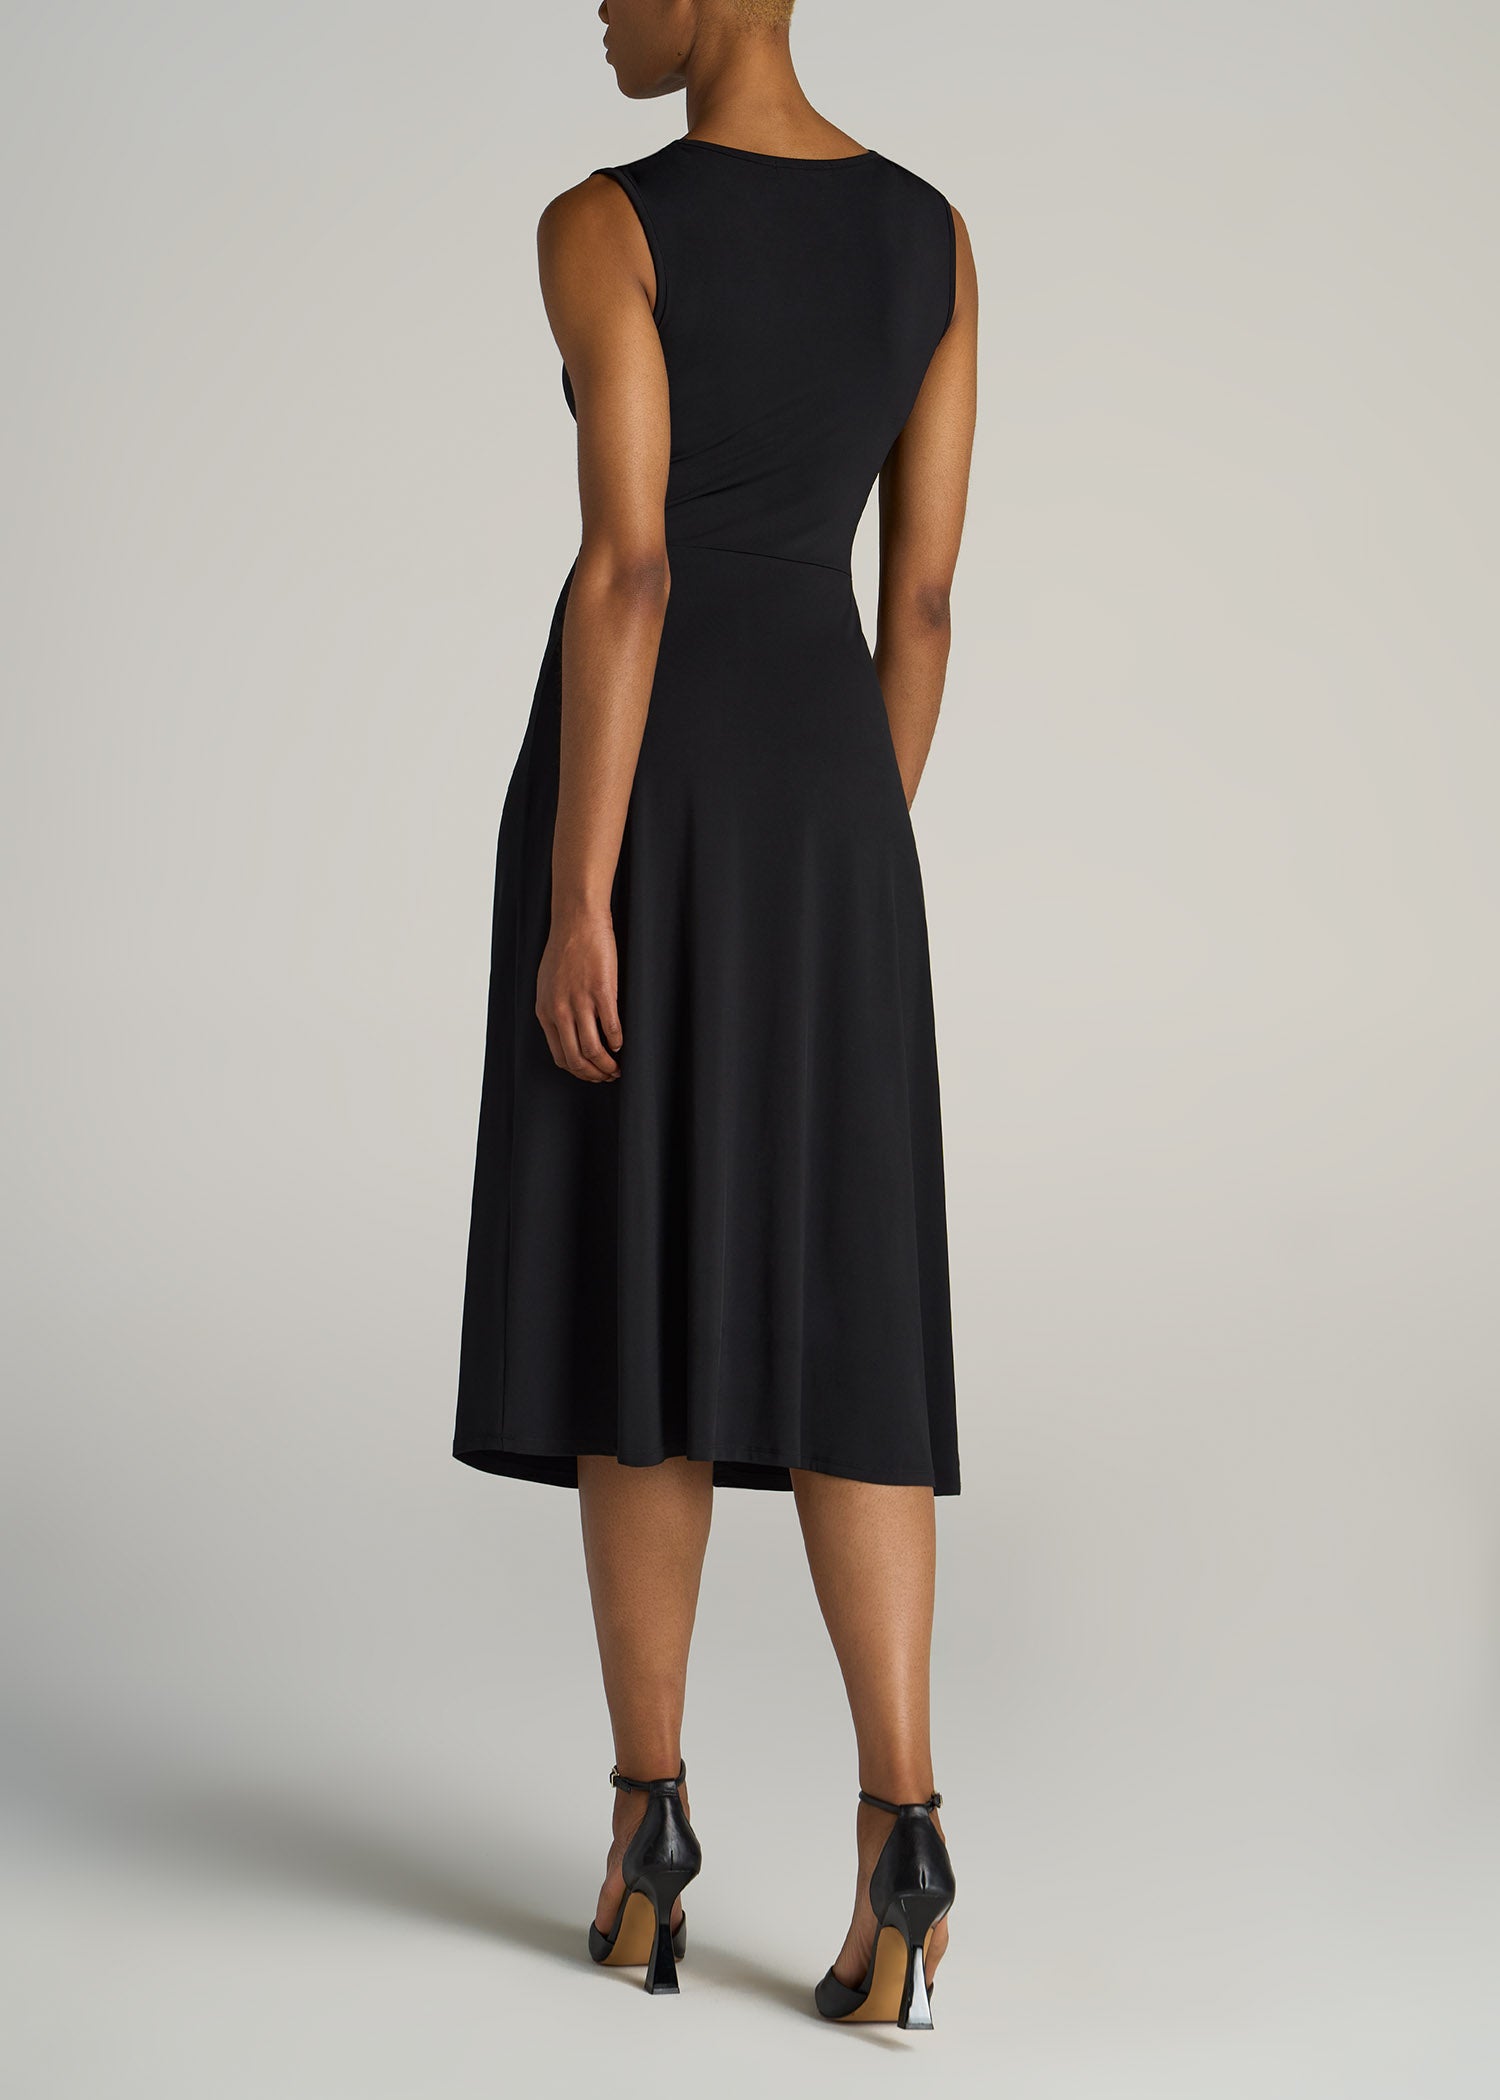    American-Tall-Women-Sleeveless-Knot-Front-Dress-Black-back